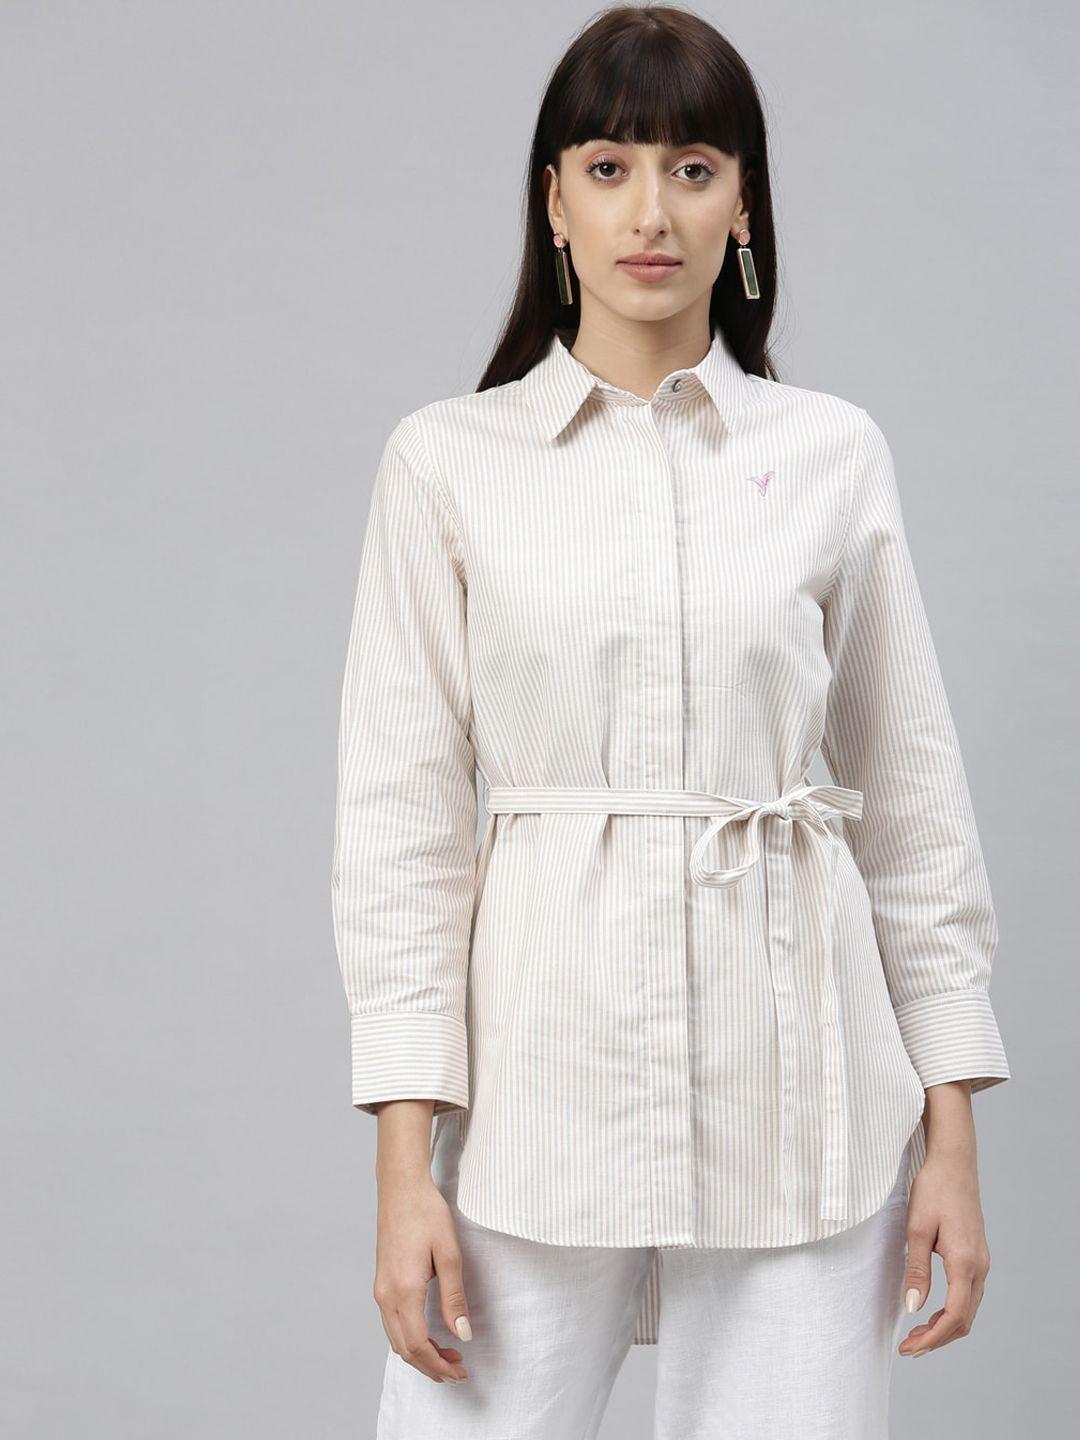 rareism women beige striped pure cotton shirt style top